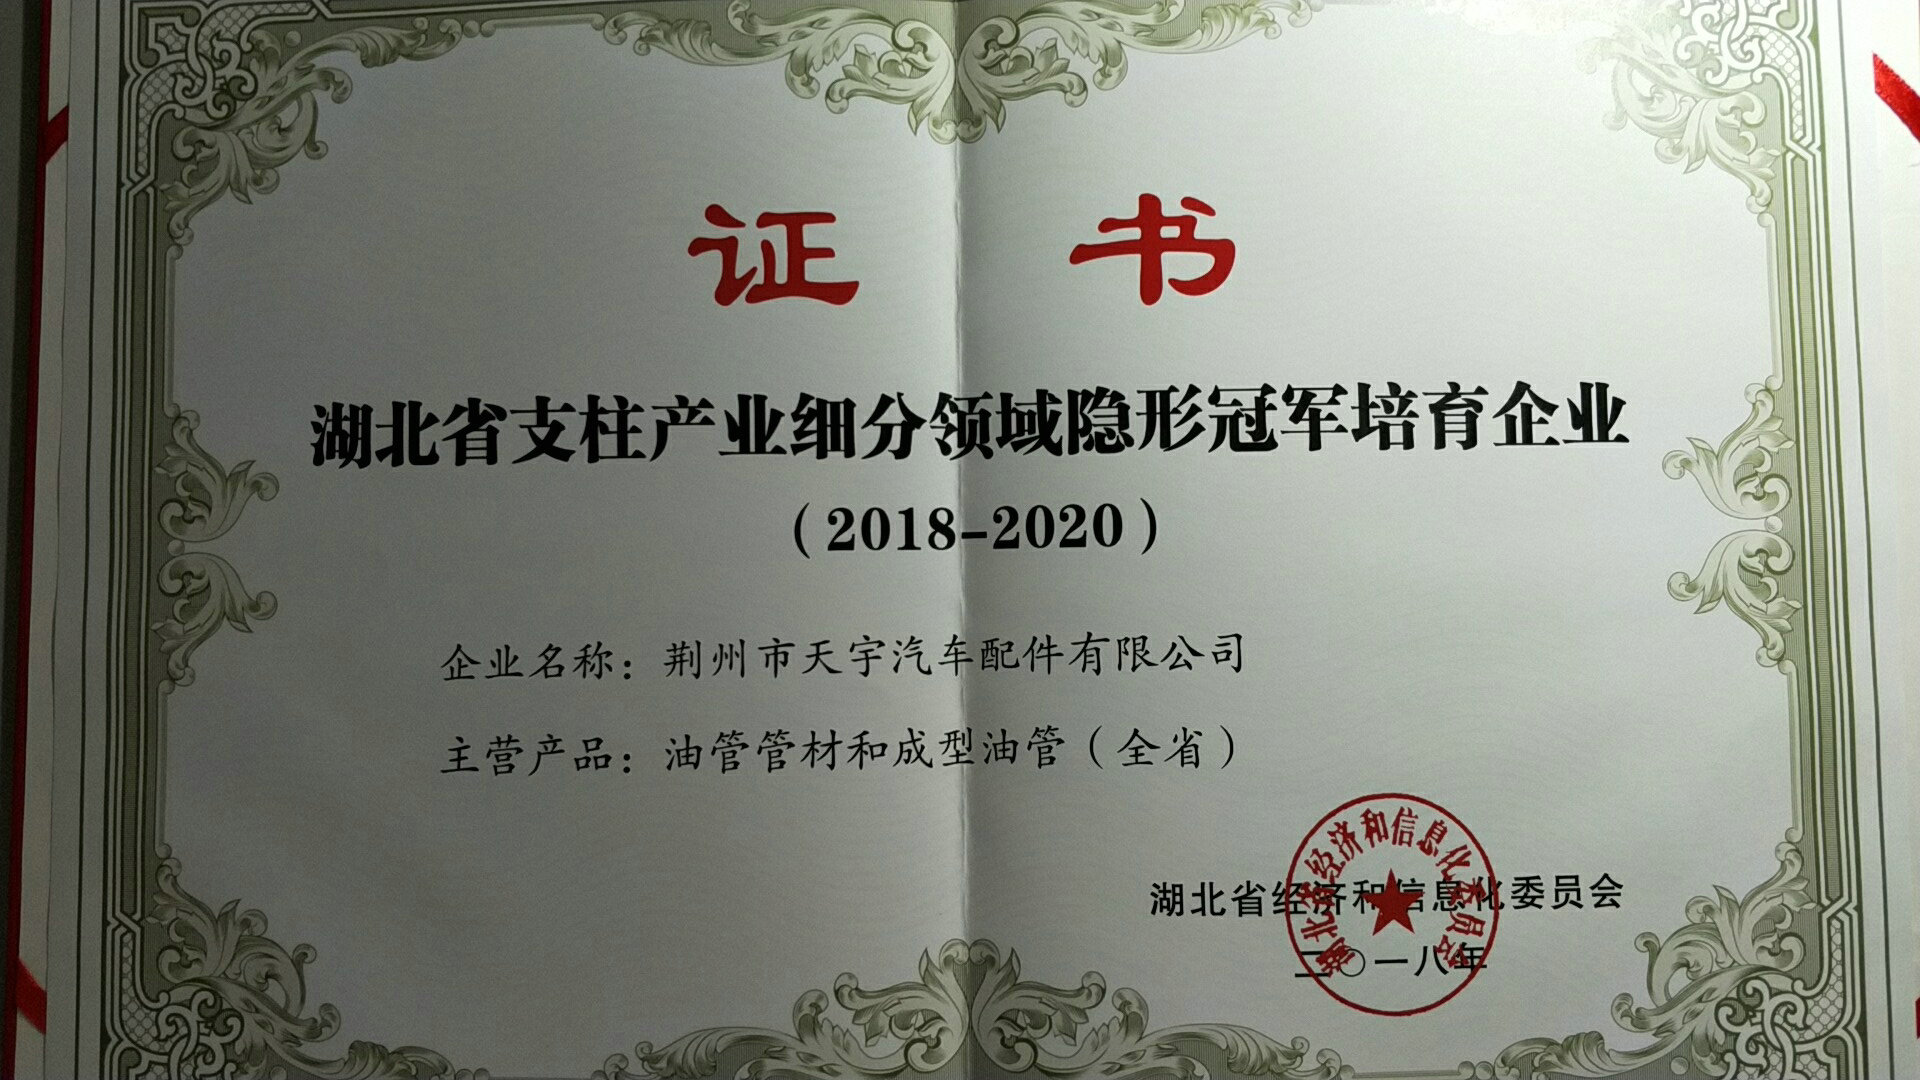 Invisible champion cultivation enterprise certificate